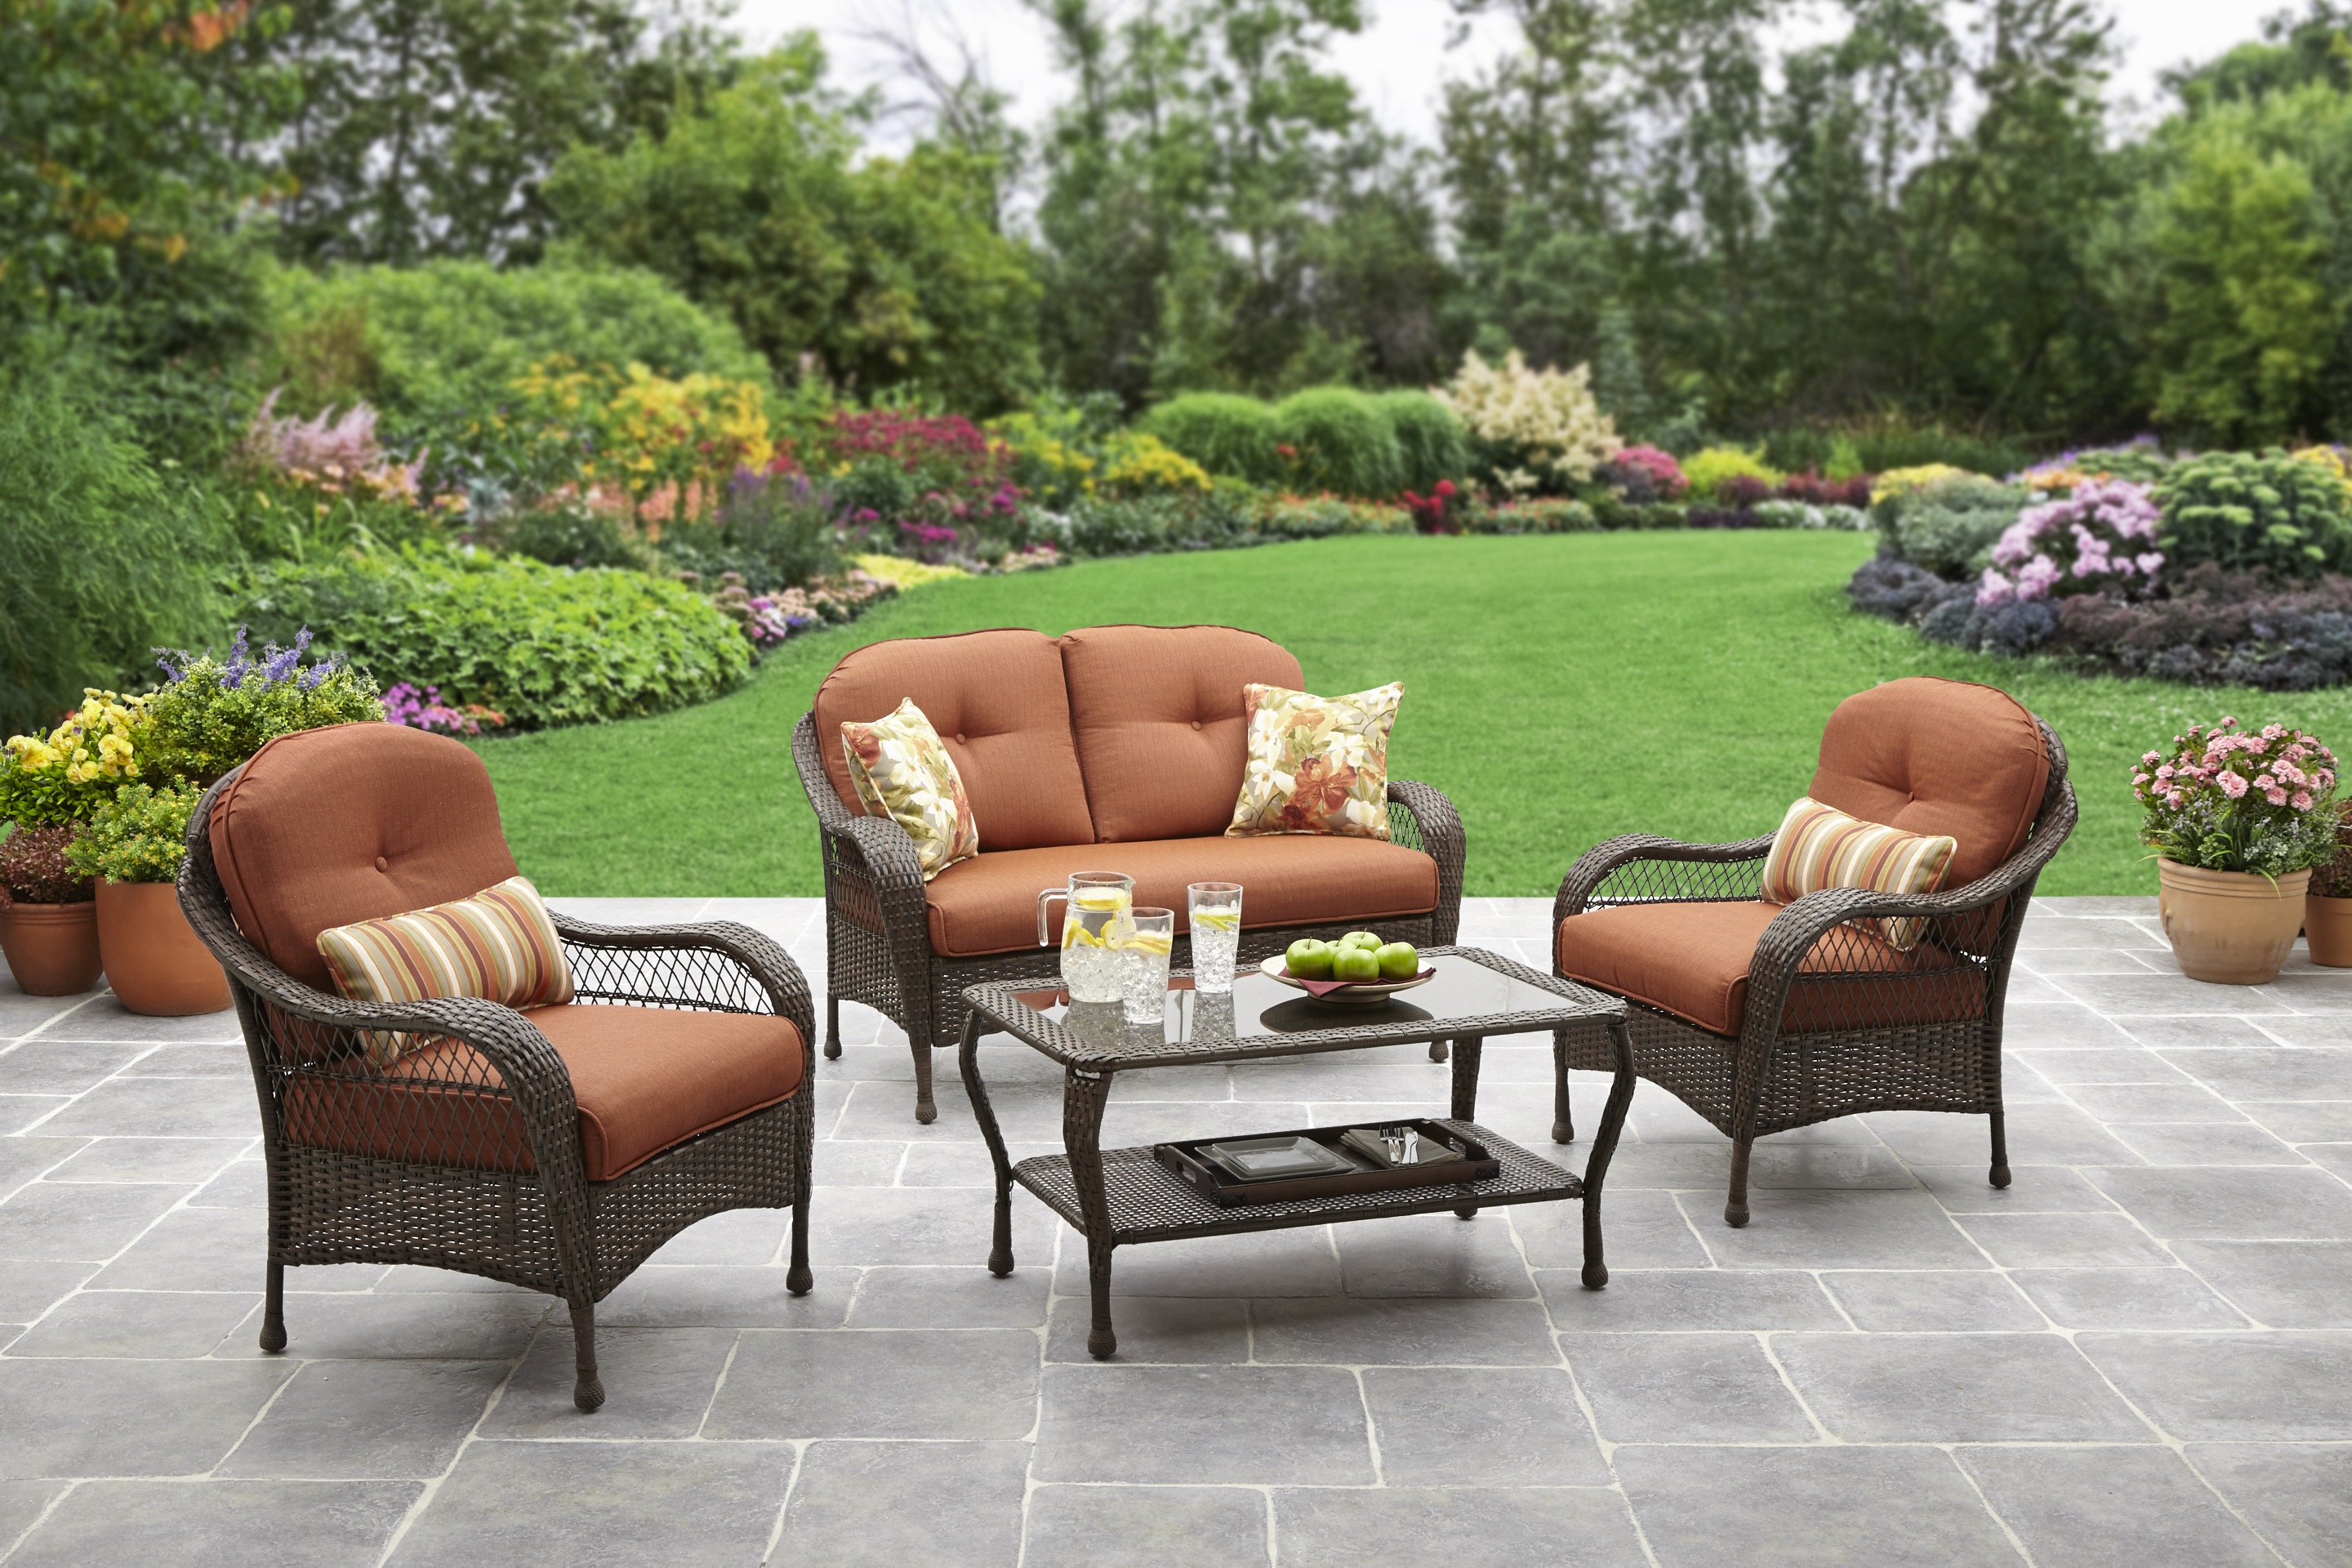 Better Homes & Gardens Azalea Ridge Outdoor Conversation Set with Orange Cushions - image 2 of 13